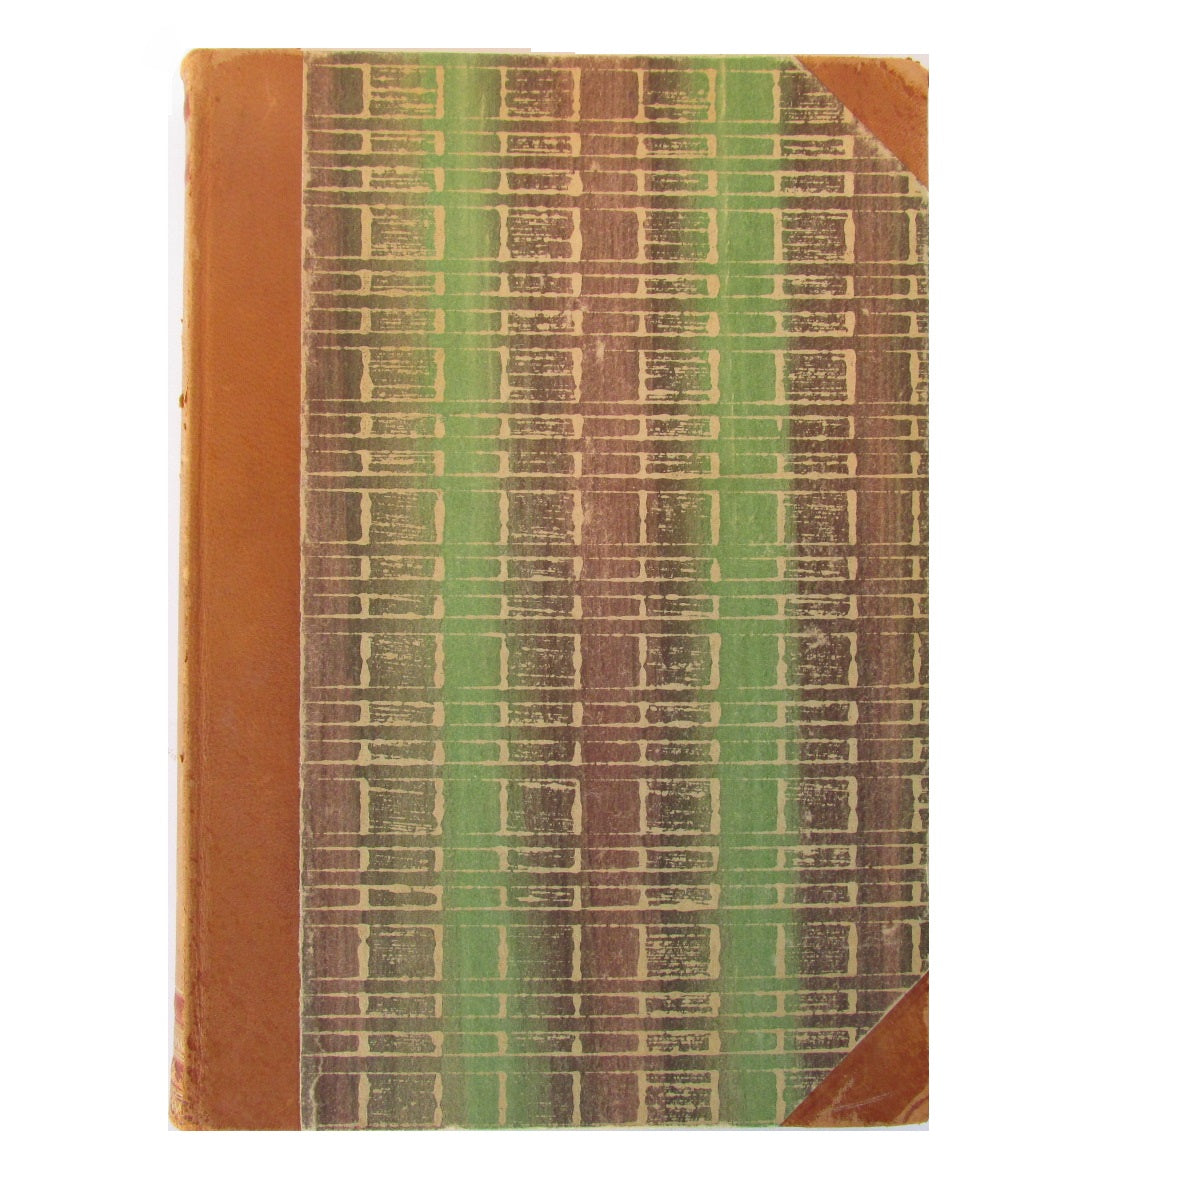 Decorative Orange and Green Book